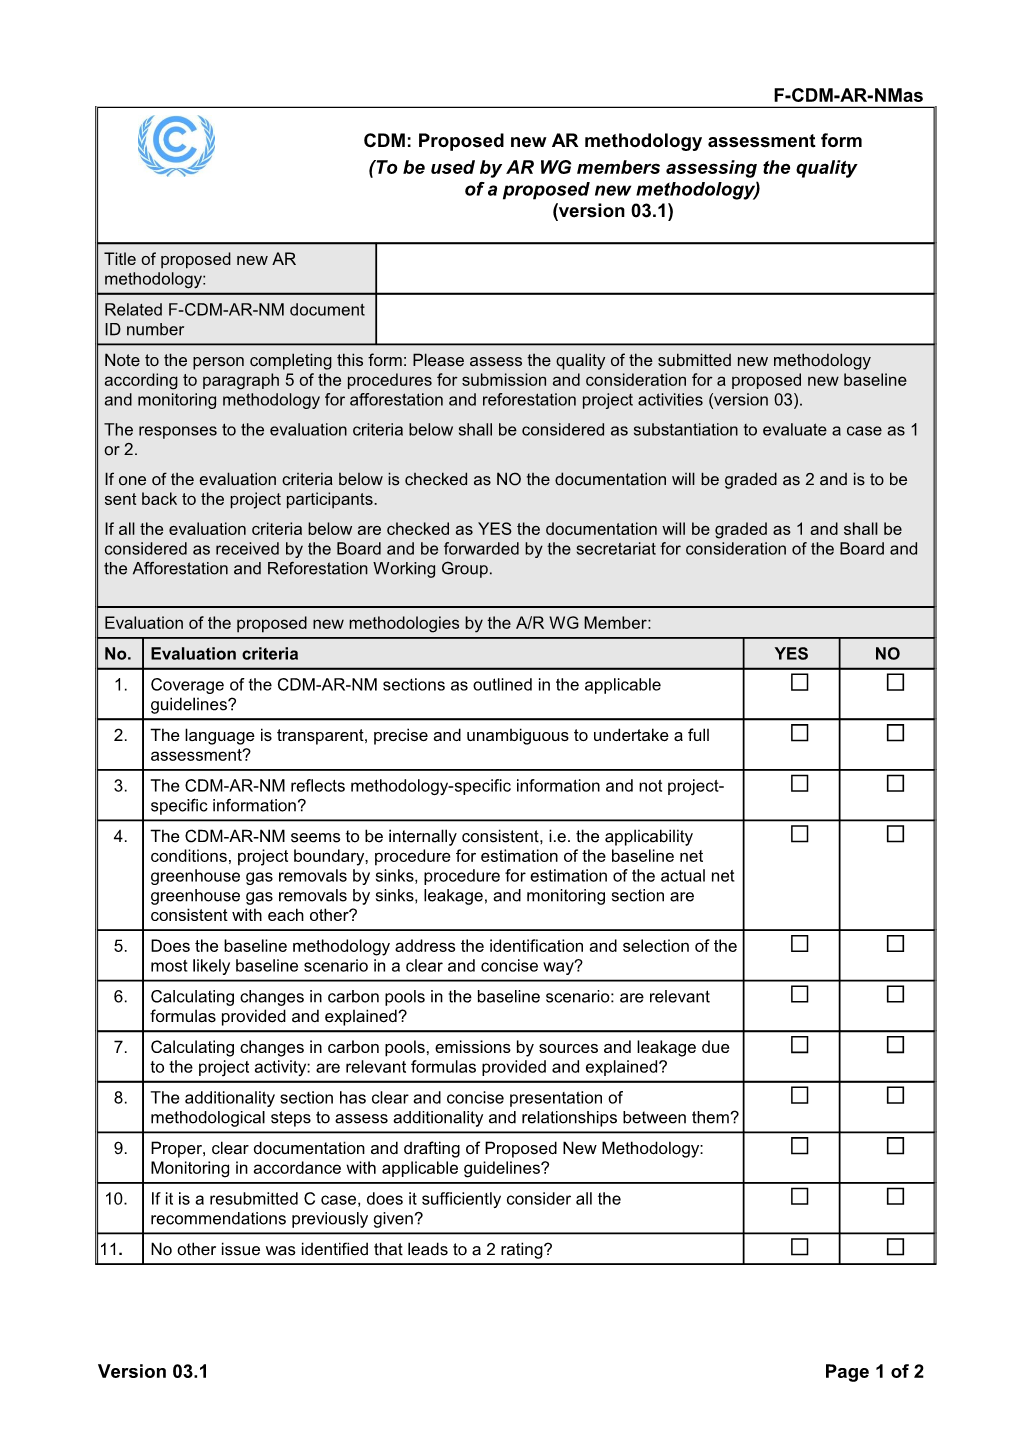 CDM: Proposed New AR Methodology Assessment Form (F-CDM-AR-Nmas). (Version 03.1)